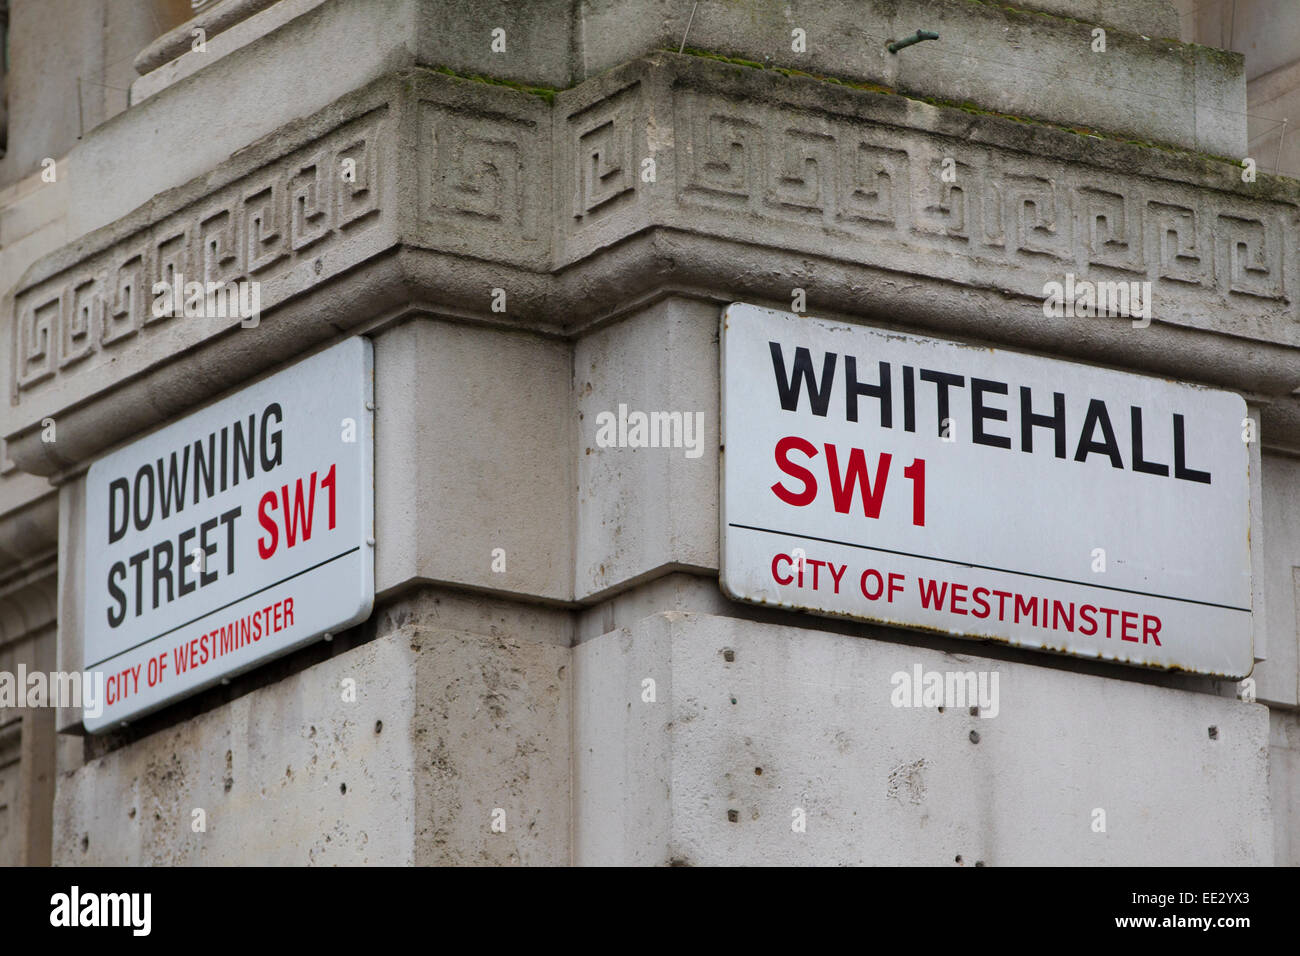 Downing Street y Whitehall signos en las calles adyacentes en Westminster, Londres, Inglaterra, Reino Unido. Foto de stock